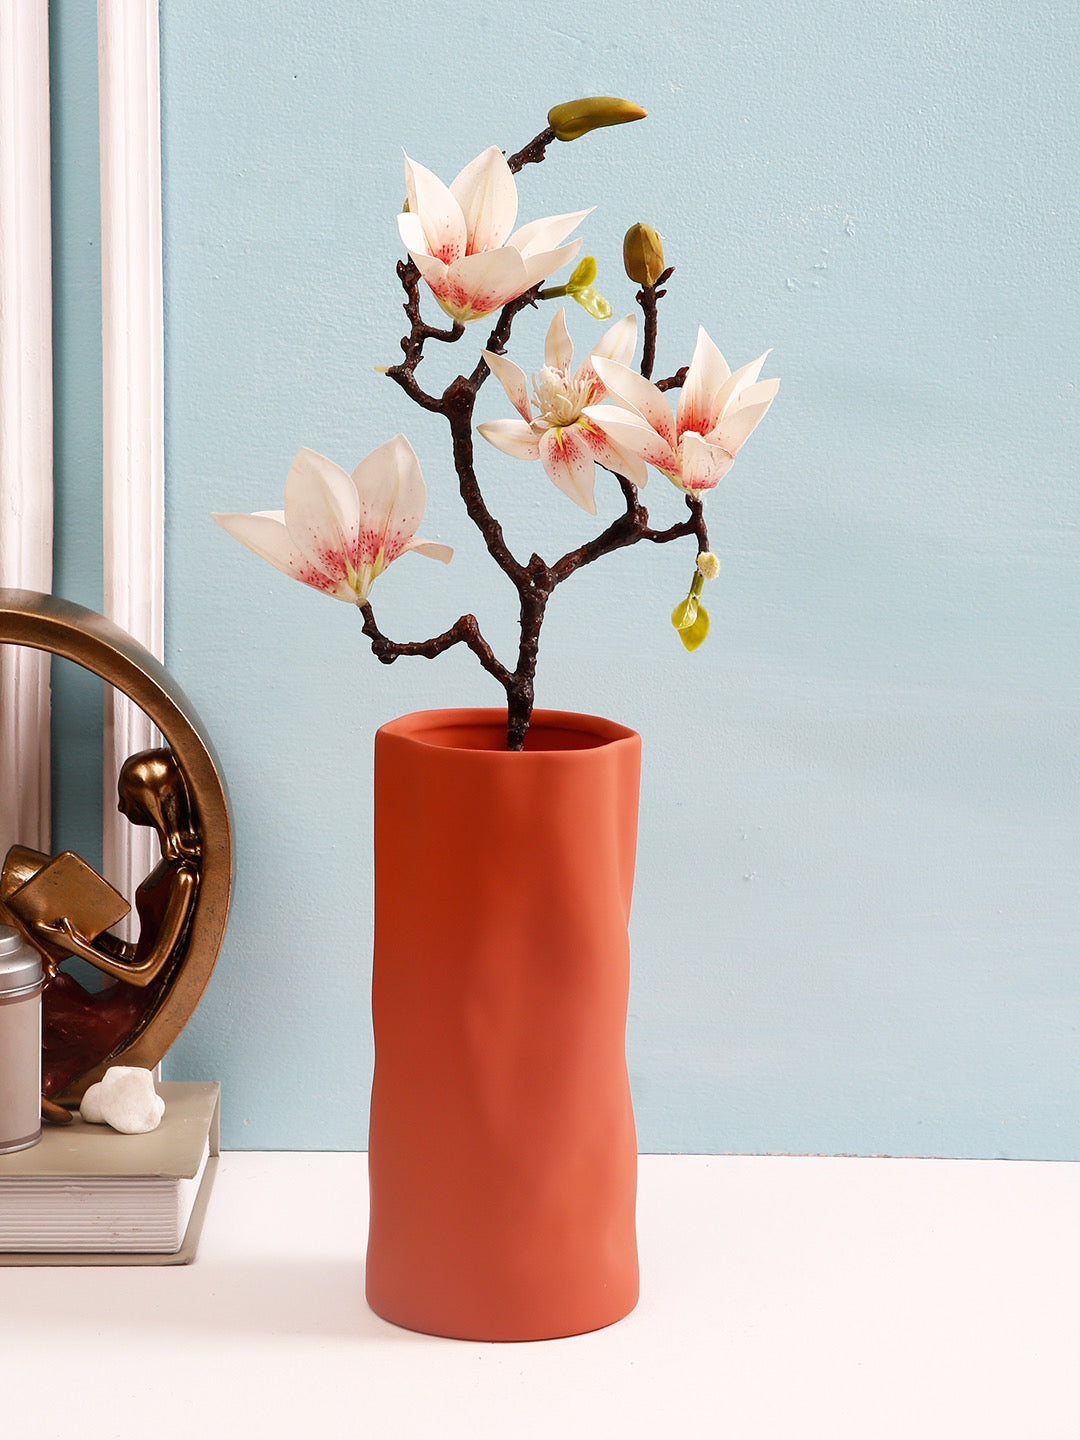 Candle Shape Orange Ceramic Vase - Default Title (VAS21418OR)